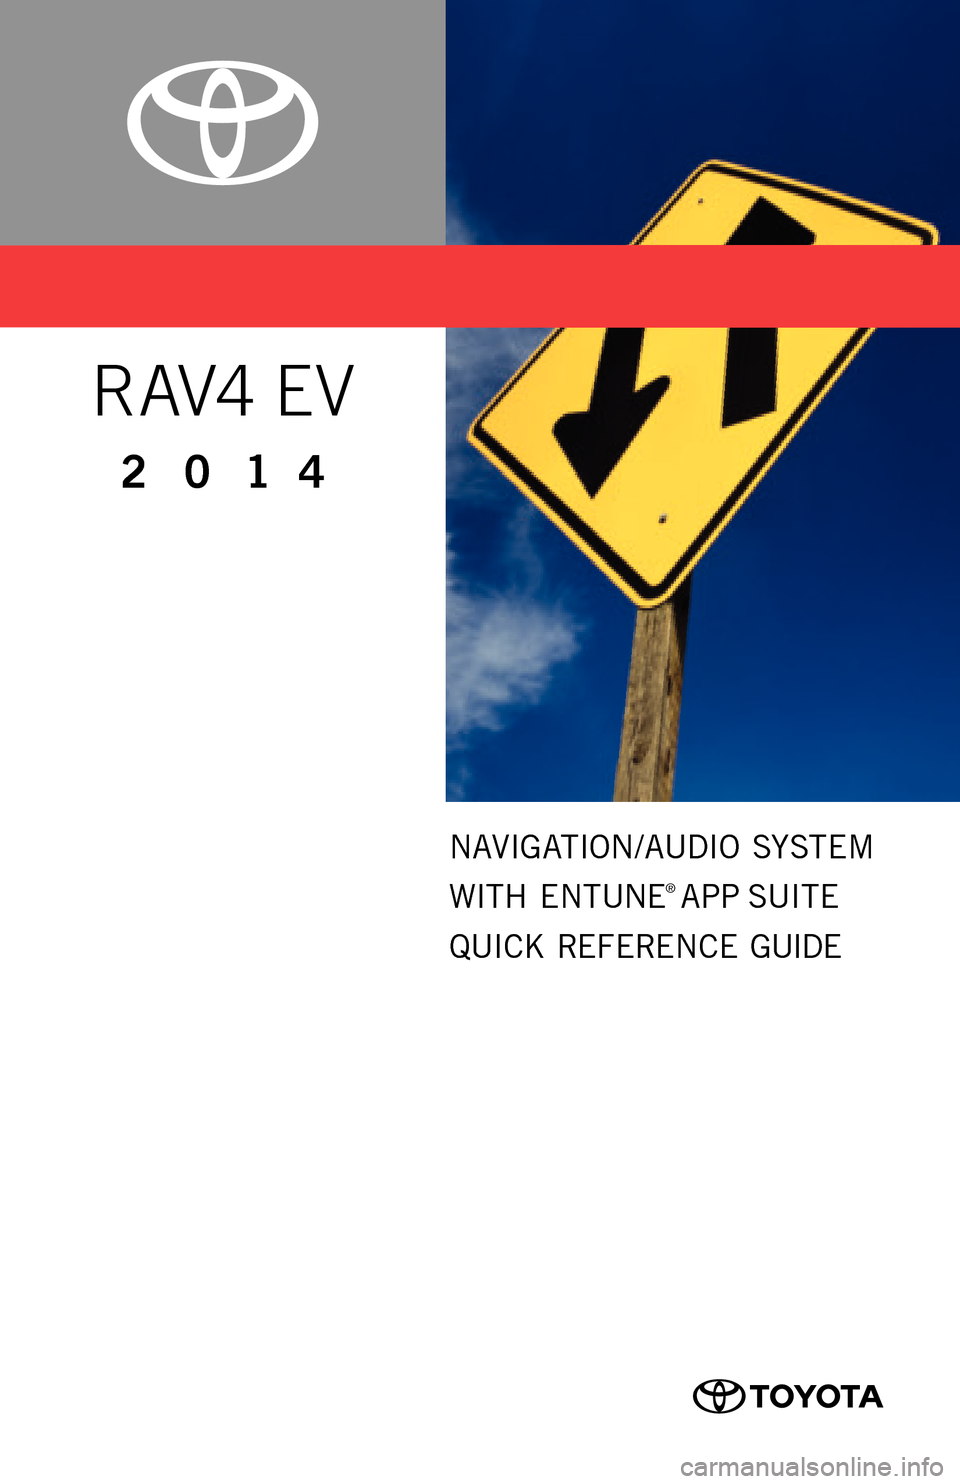 TOYOTA RAV4 EV 2014 1.G Navigation Manual 00505-NAV14-RAVEV
Printed
 in U. S. A .  11 / 1 3
13-TCS-07670
2 0 1 4
R AV4  EV
NAVIGATION/AUDIO  SYSTEM
WITH  ENTUNE
® APP SUITE
QUICK  REFERENCE  GUIDE
CUSTOMER EXPERIENCE  CENTER
1- 8 0 0 - 3 31-